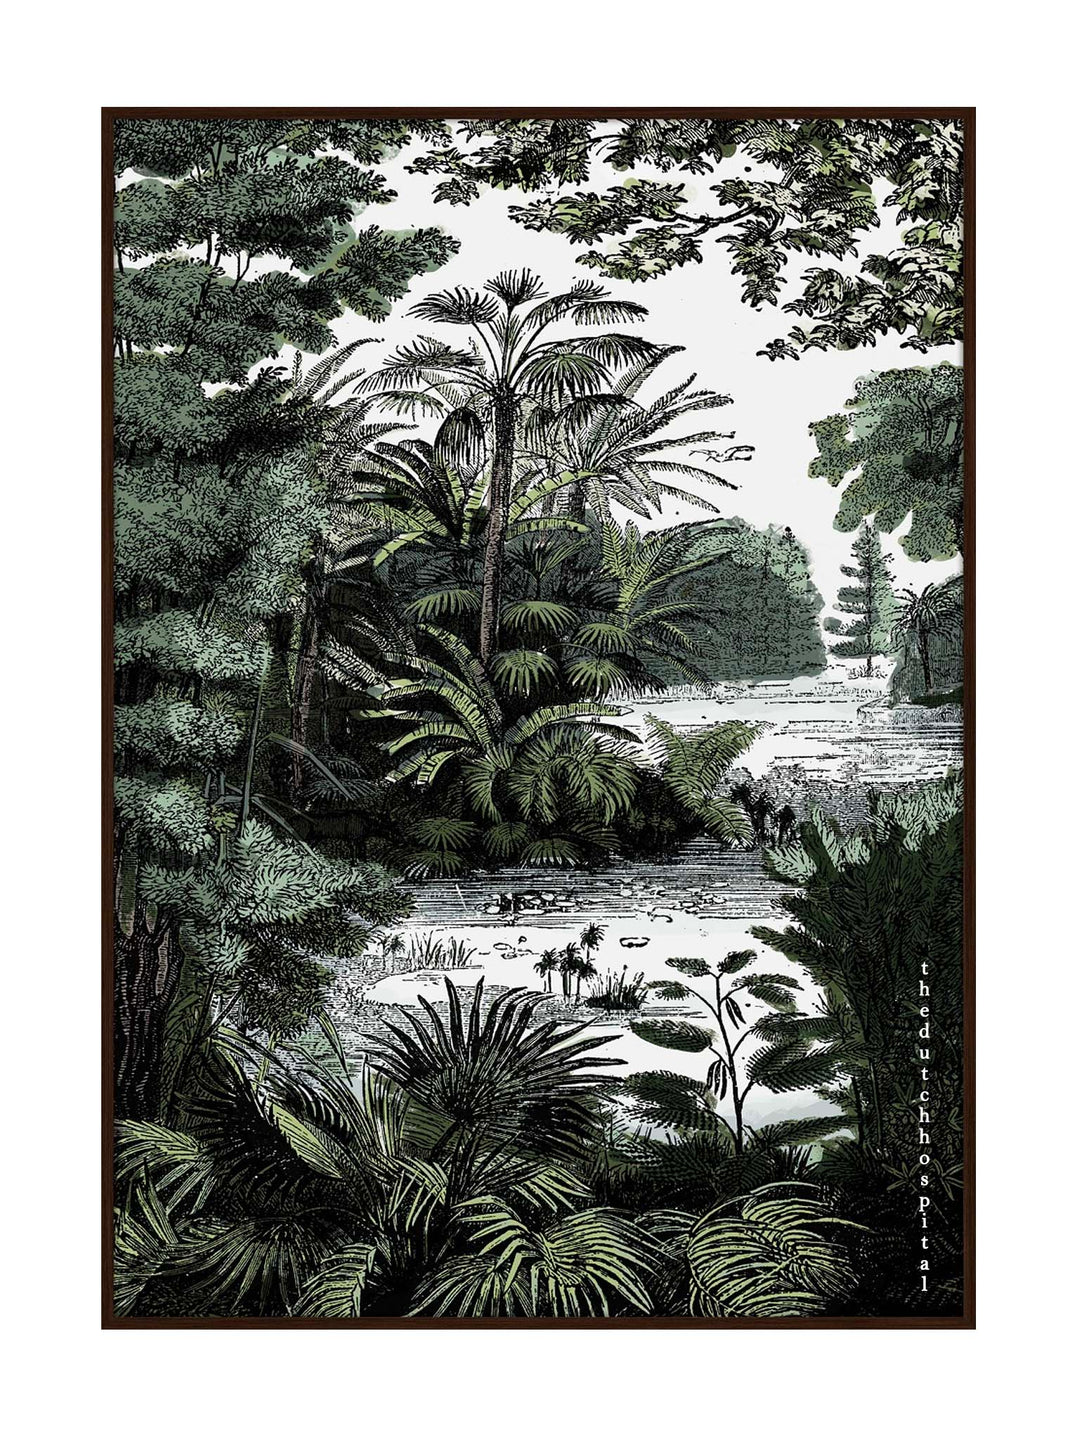 Tropical Garden, Lotus Pond Wall Picture, Outdoor Garden Wall Art BLACK frame